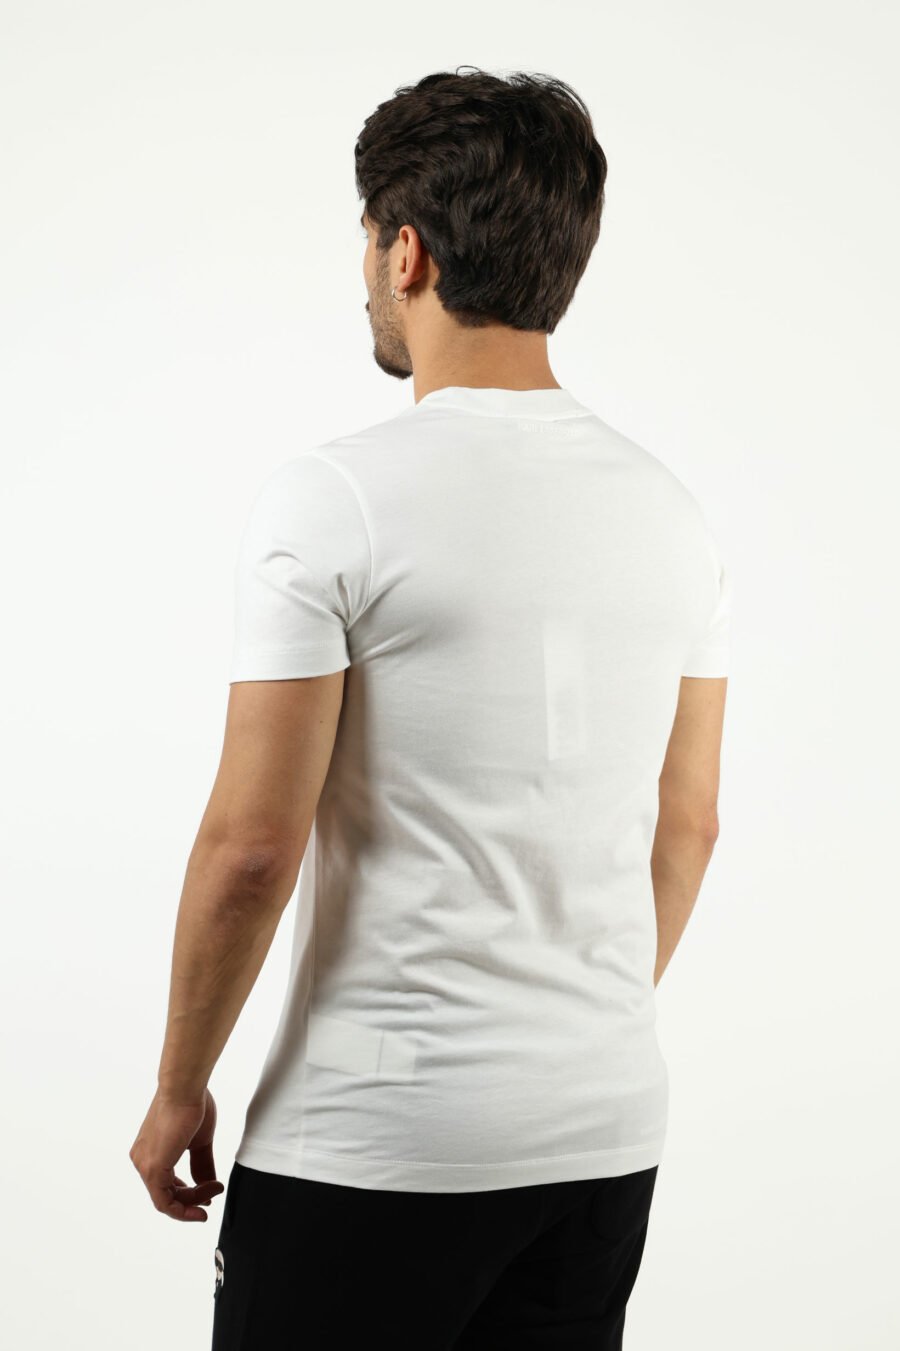 Camiseta blanca con maxilogo "karl" negro - number13931